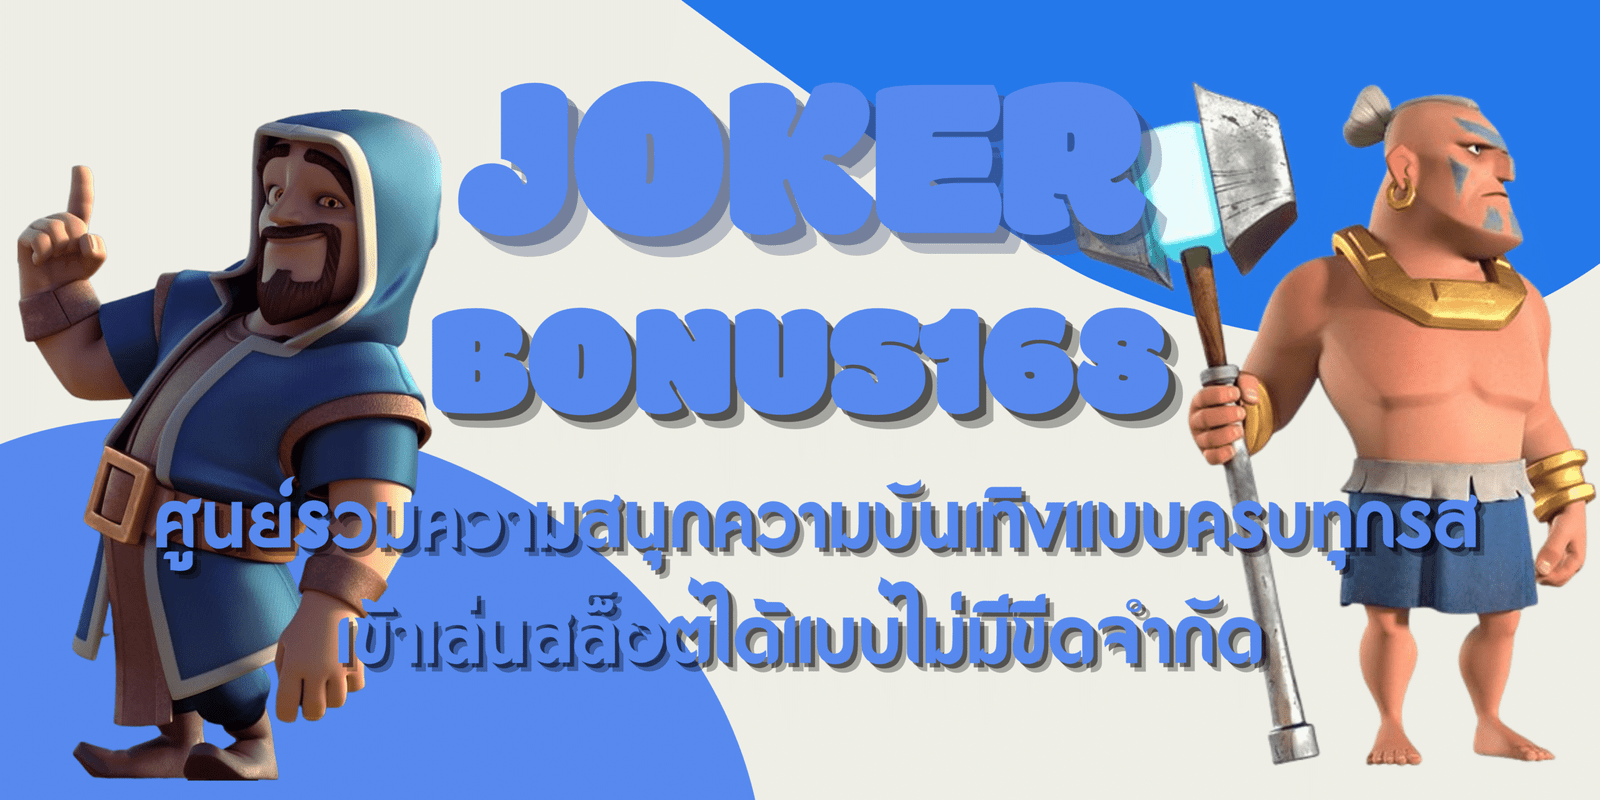 joker-bonus168-สมัครสมาชิก